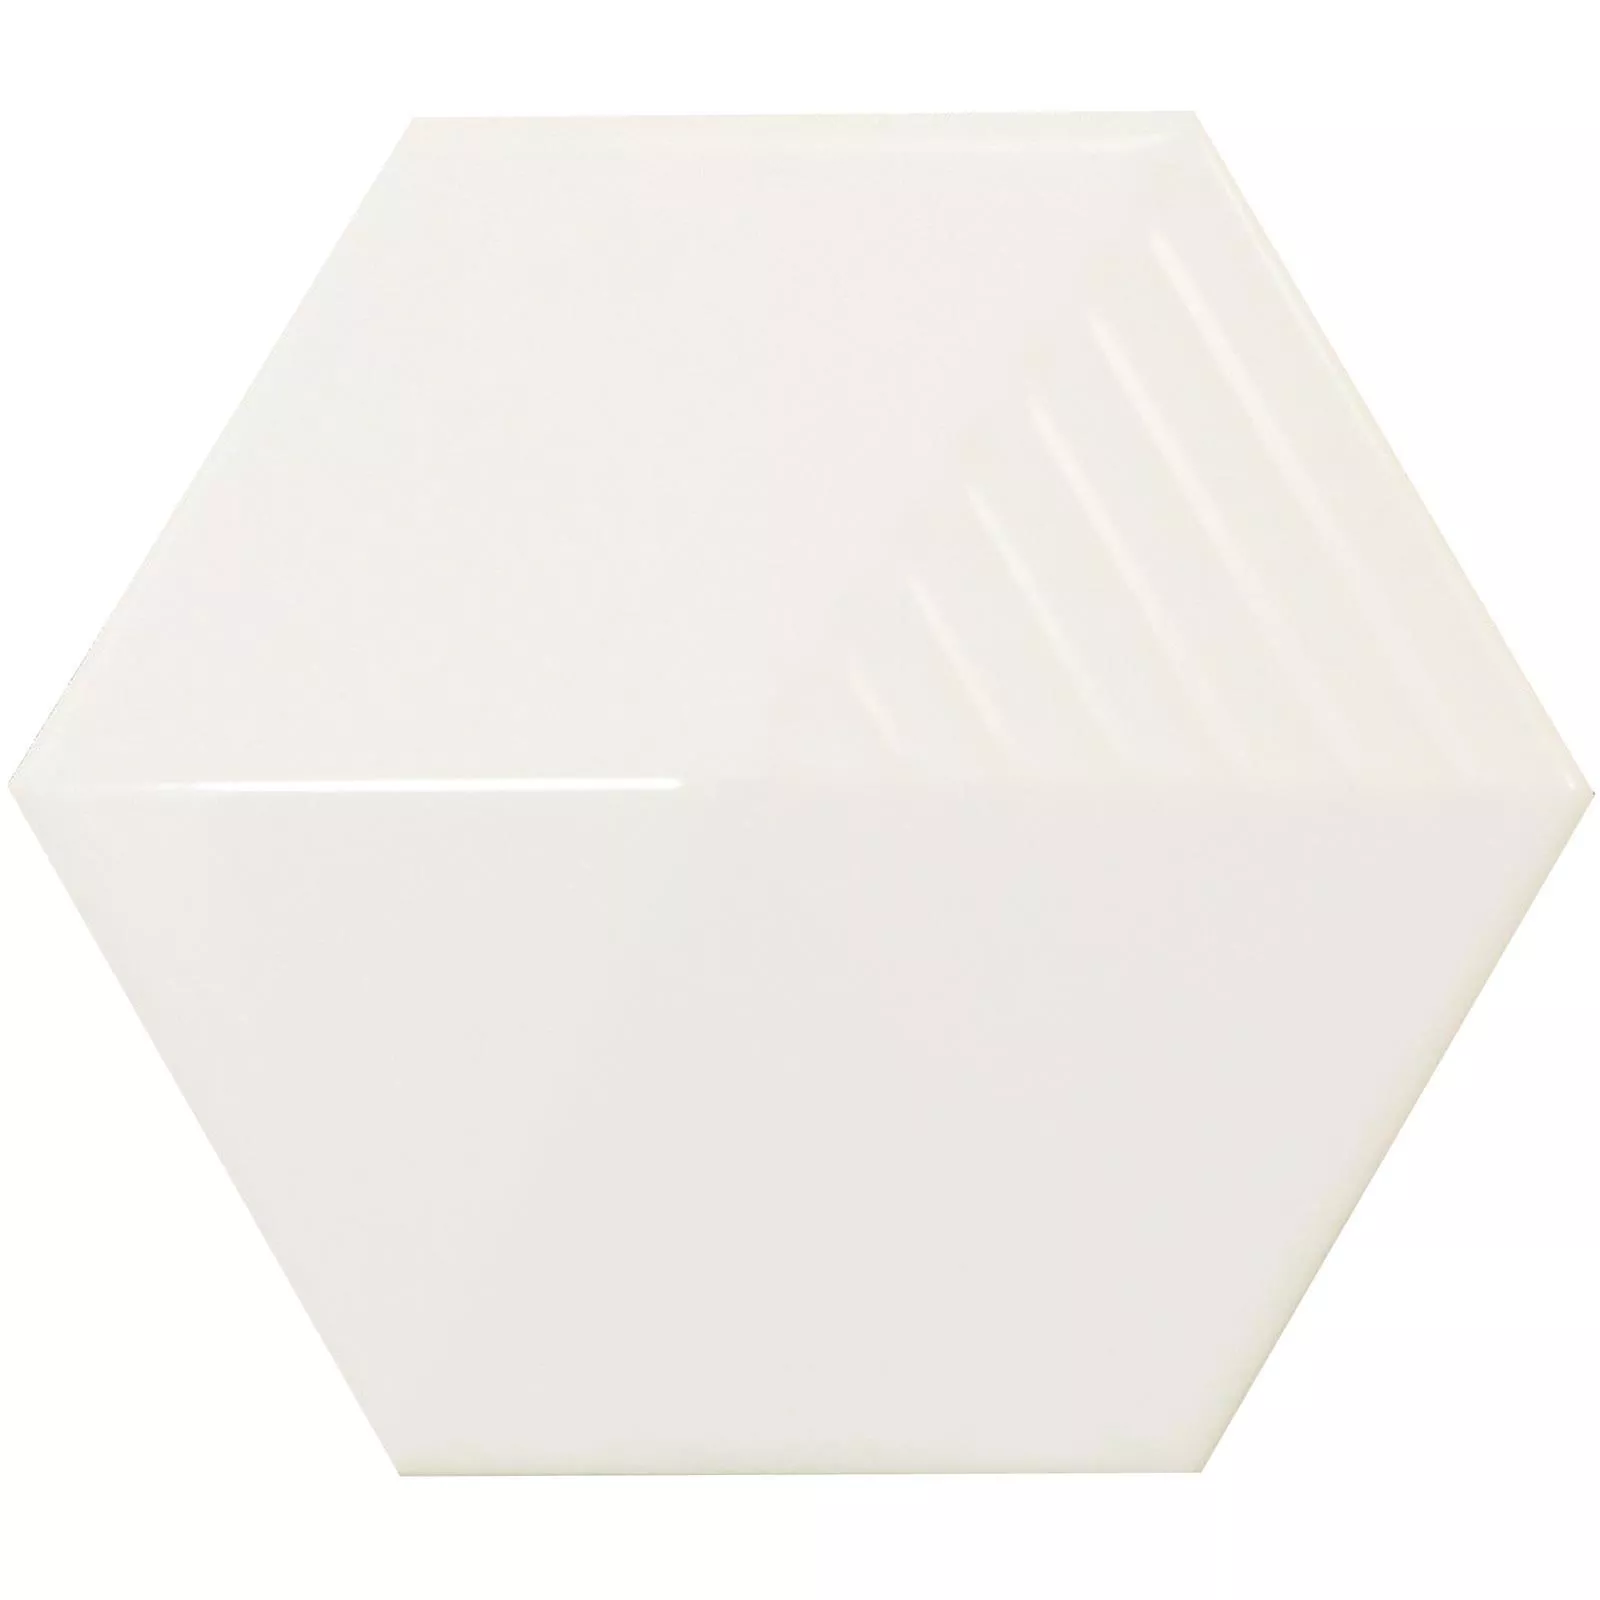 Sample Wandtegels Rockford 3D Hexagon 12,4x10,7cm Wit